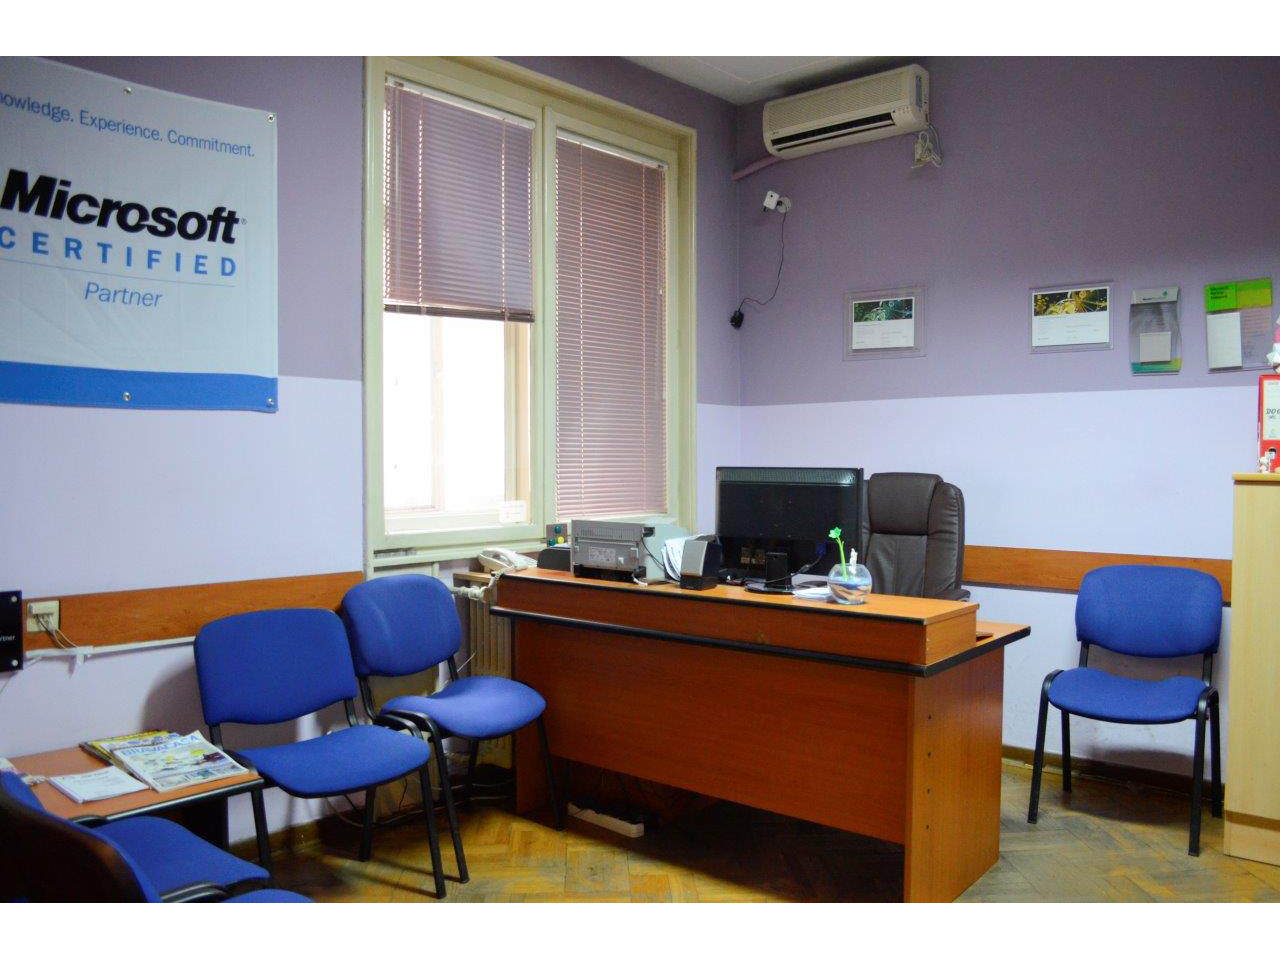 SOFTLINE EDUCATION Škole računara Beograd